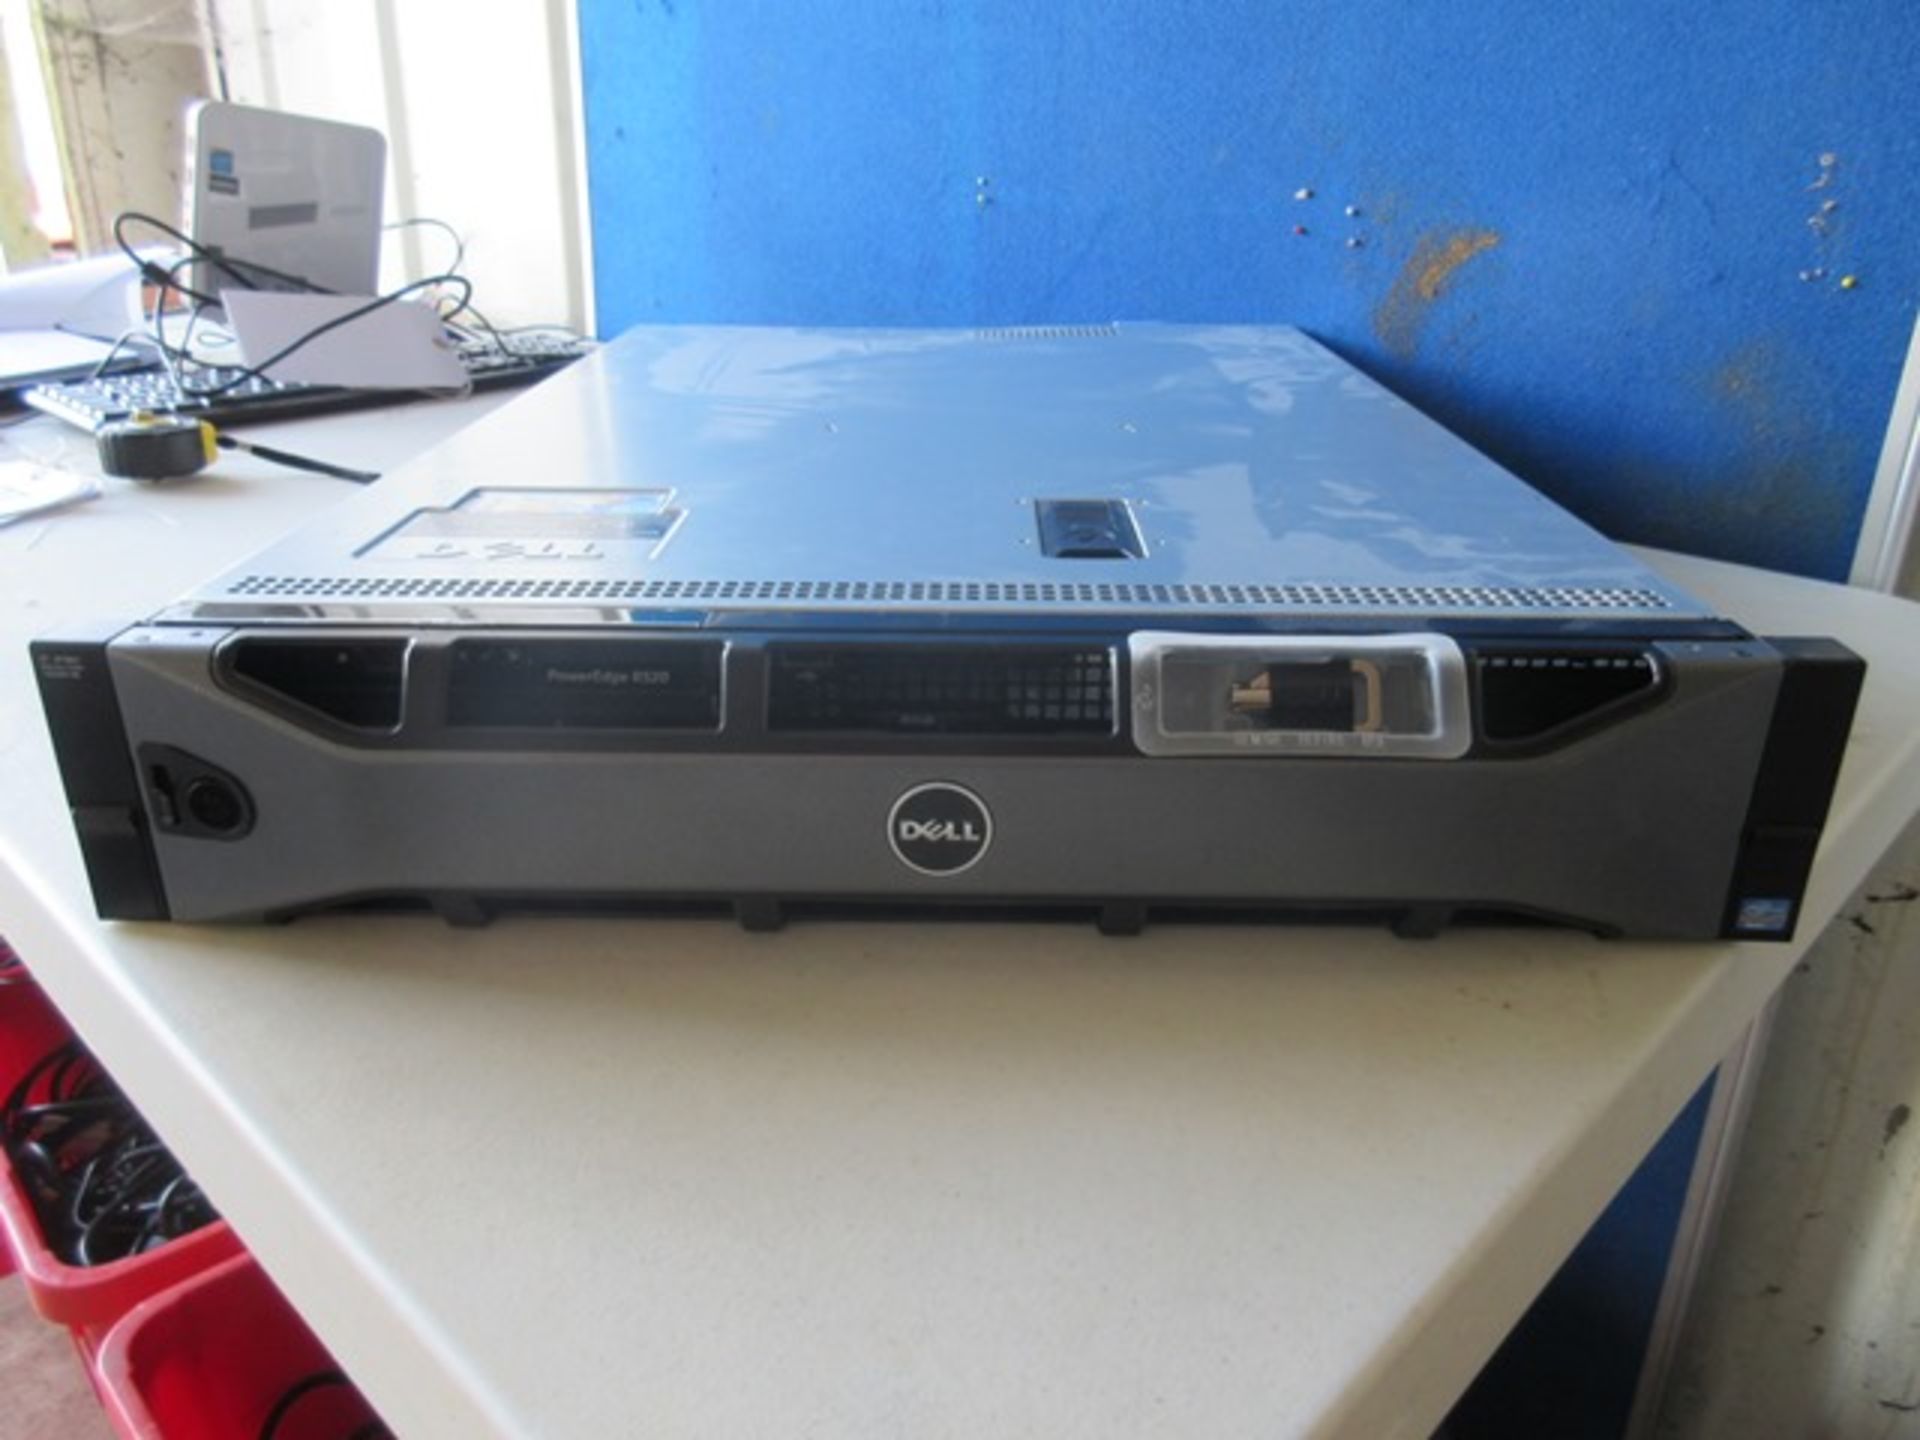 Dell Poweredge R520 rack server, product key: 6CJTN-QHXBB-2UWHX-XQKPH-DRQWT